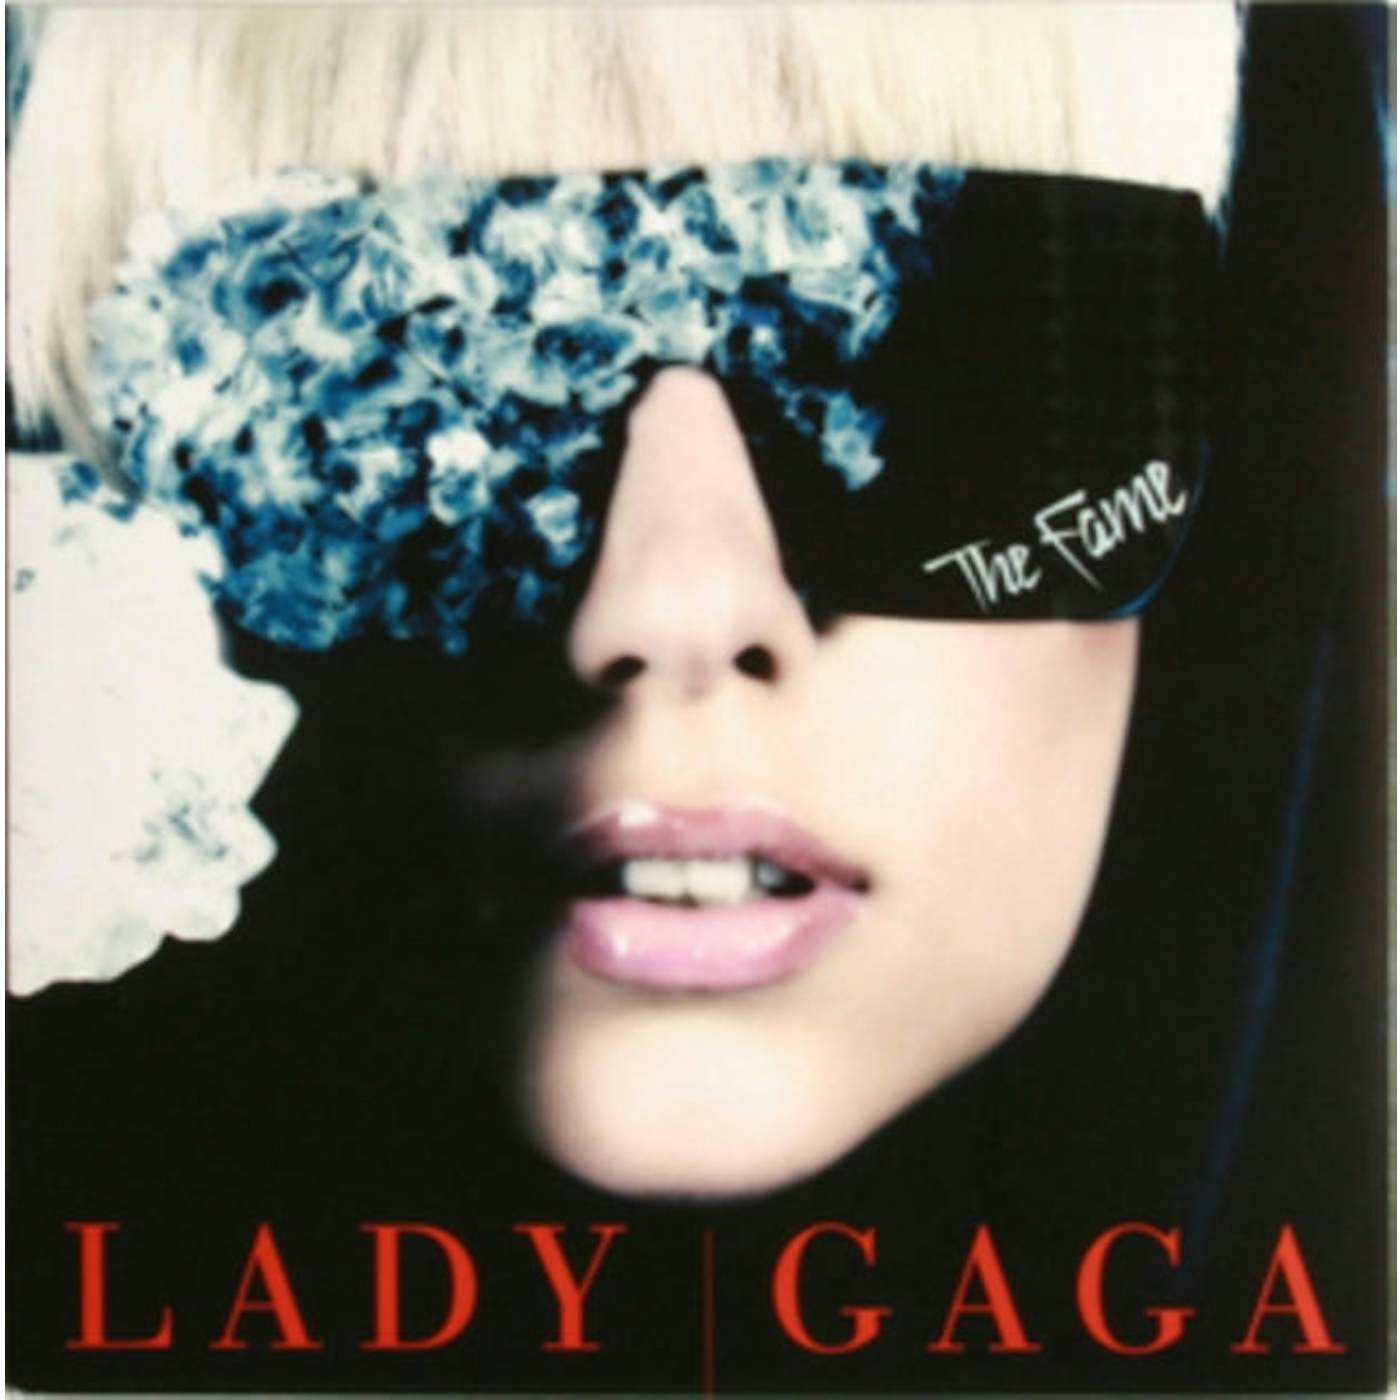 Lady Gaga LP Vinyl Record - The Fame